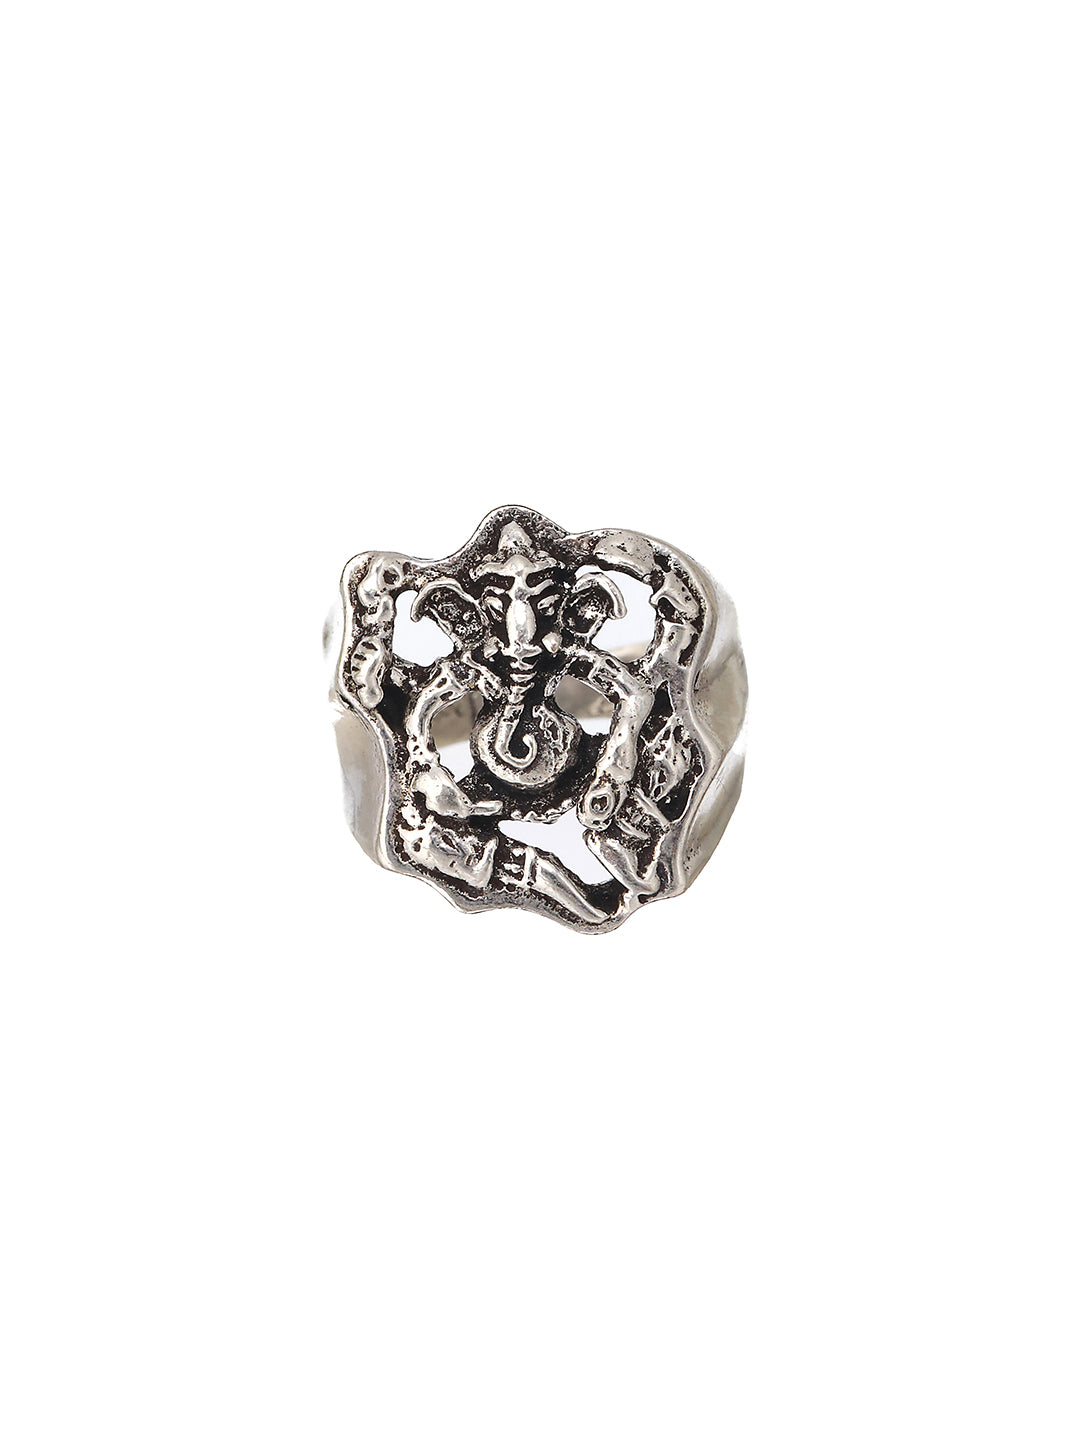 Bold by Priyaasi Lord Ganesha Silver-Plated Ring for Men